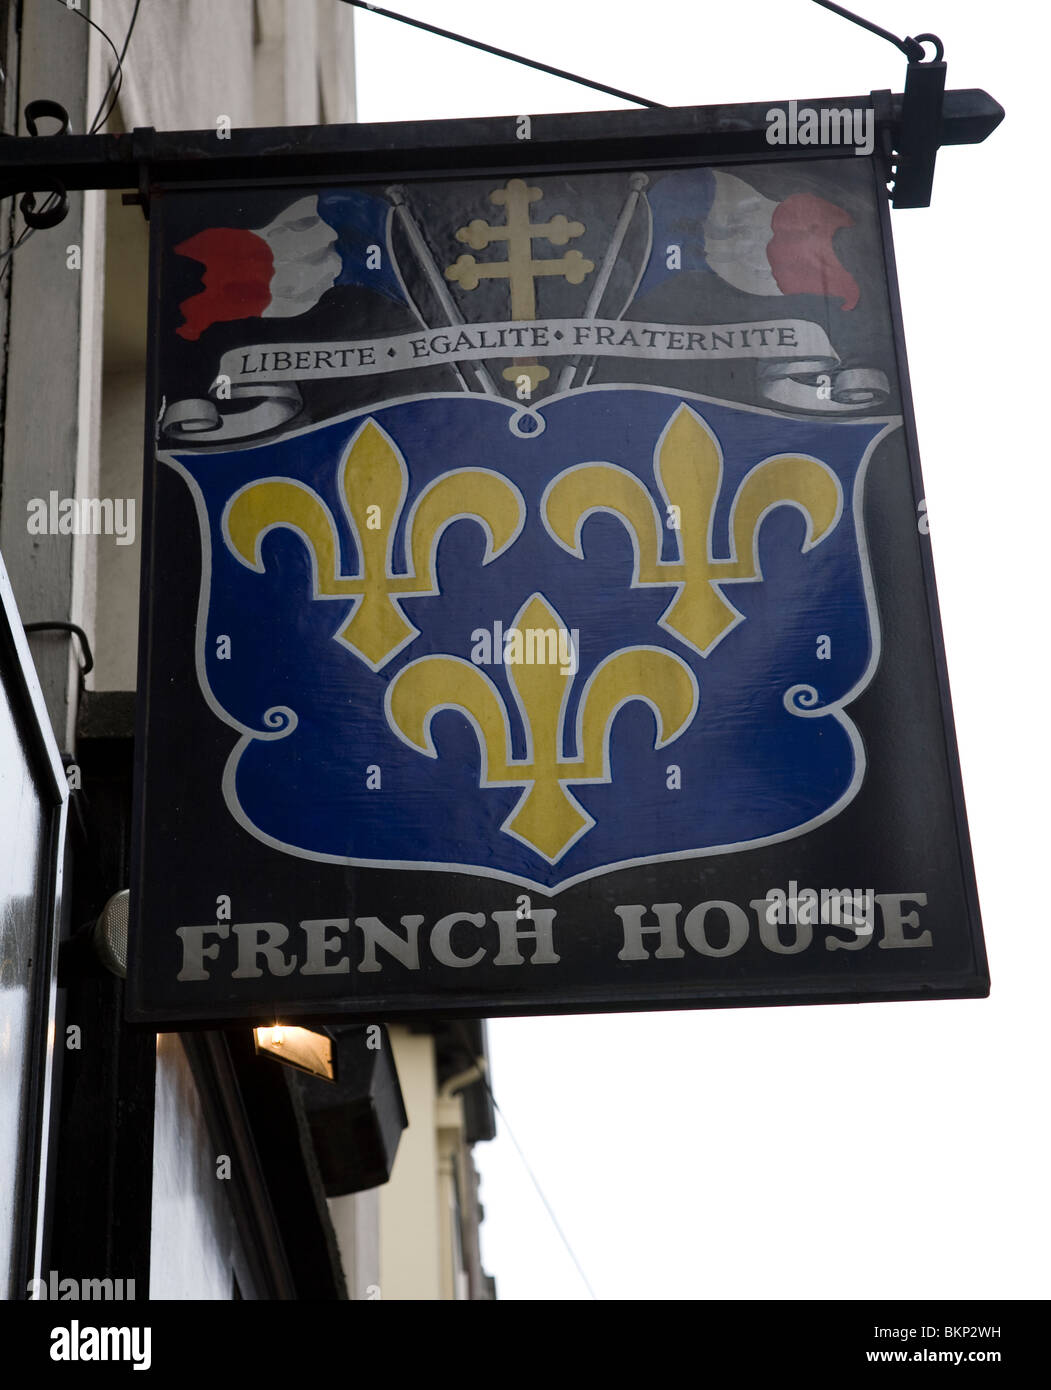 French House pub segno, Soho, Londra, Inghilterra Foto Stock